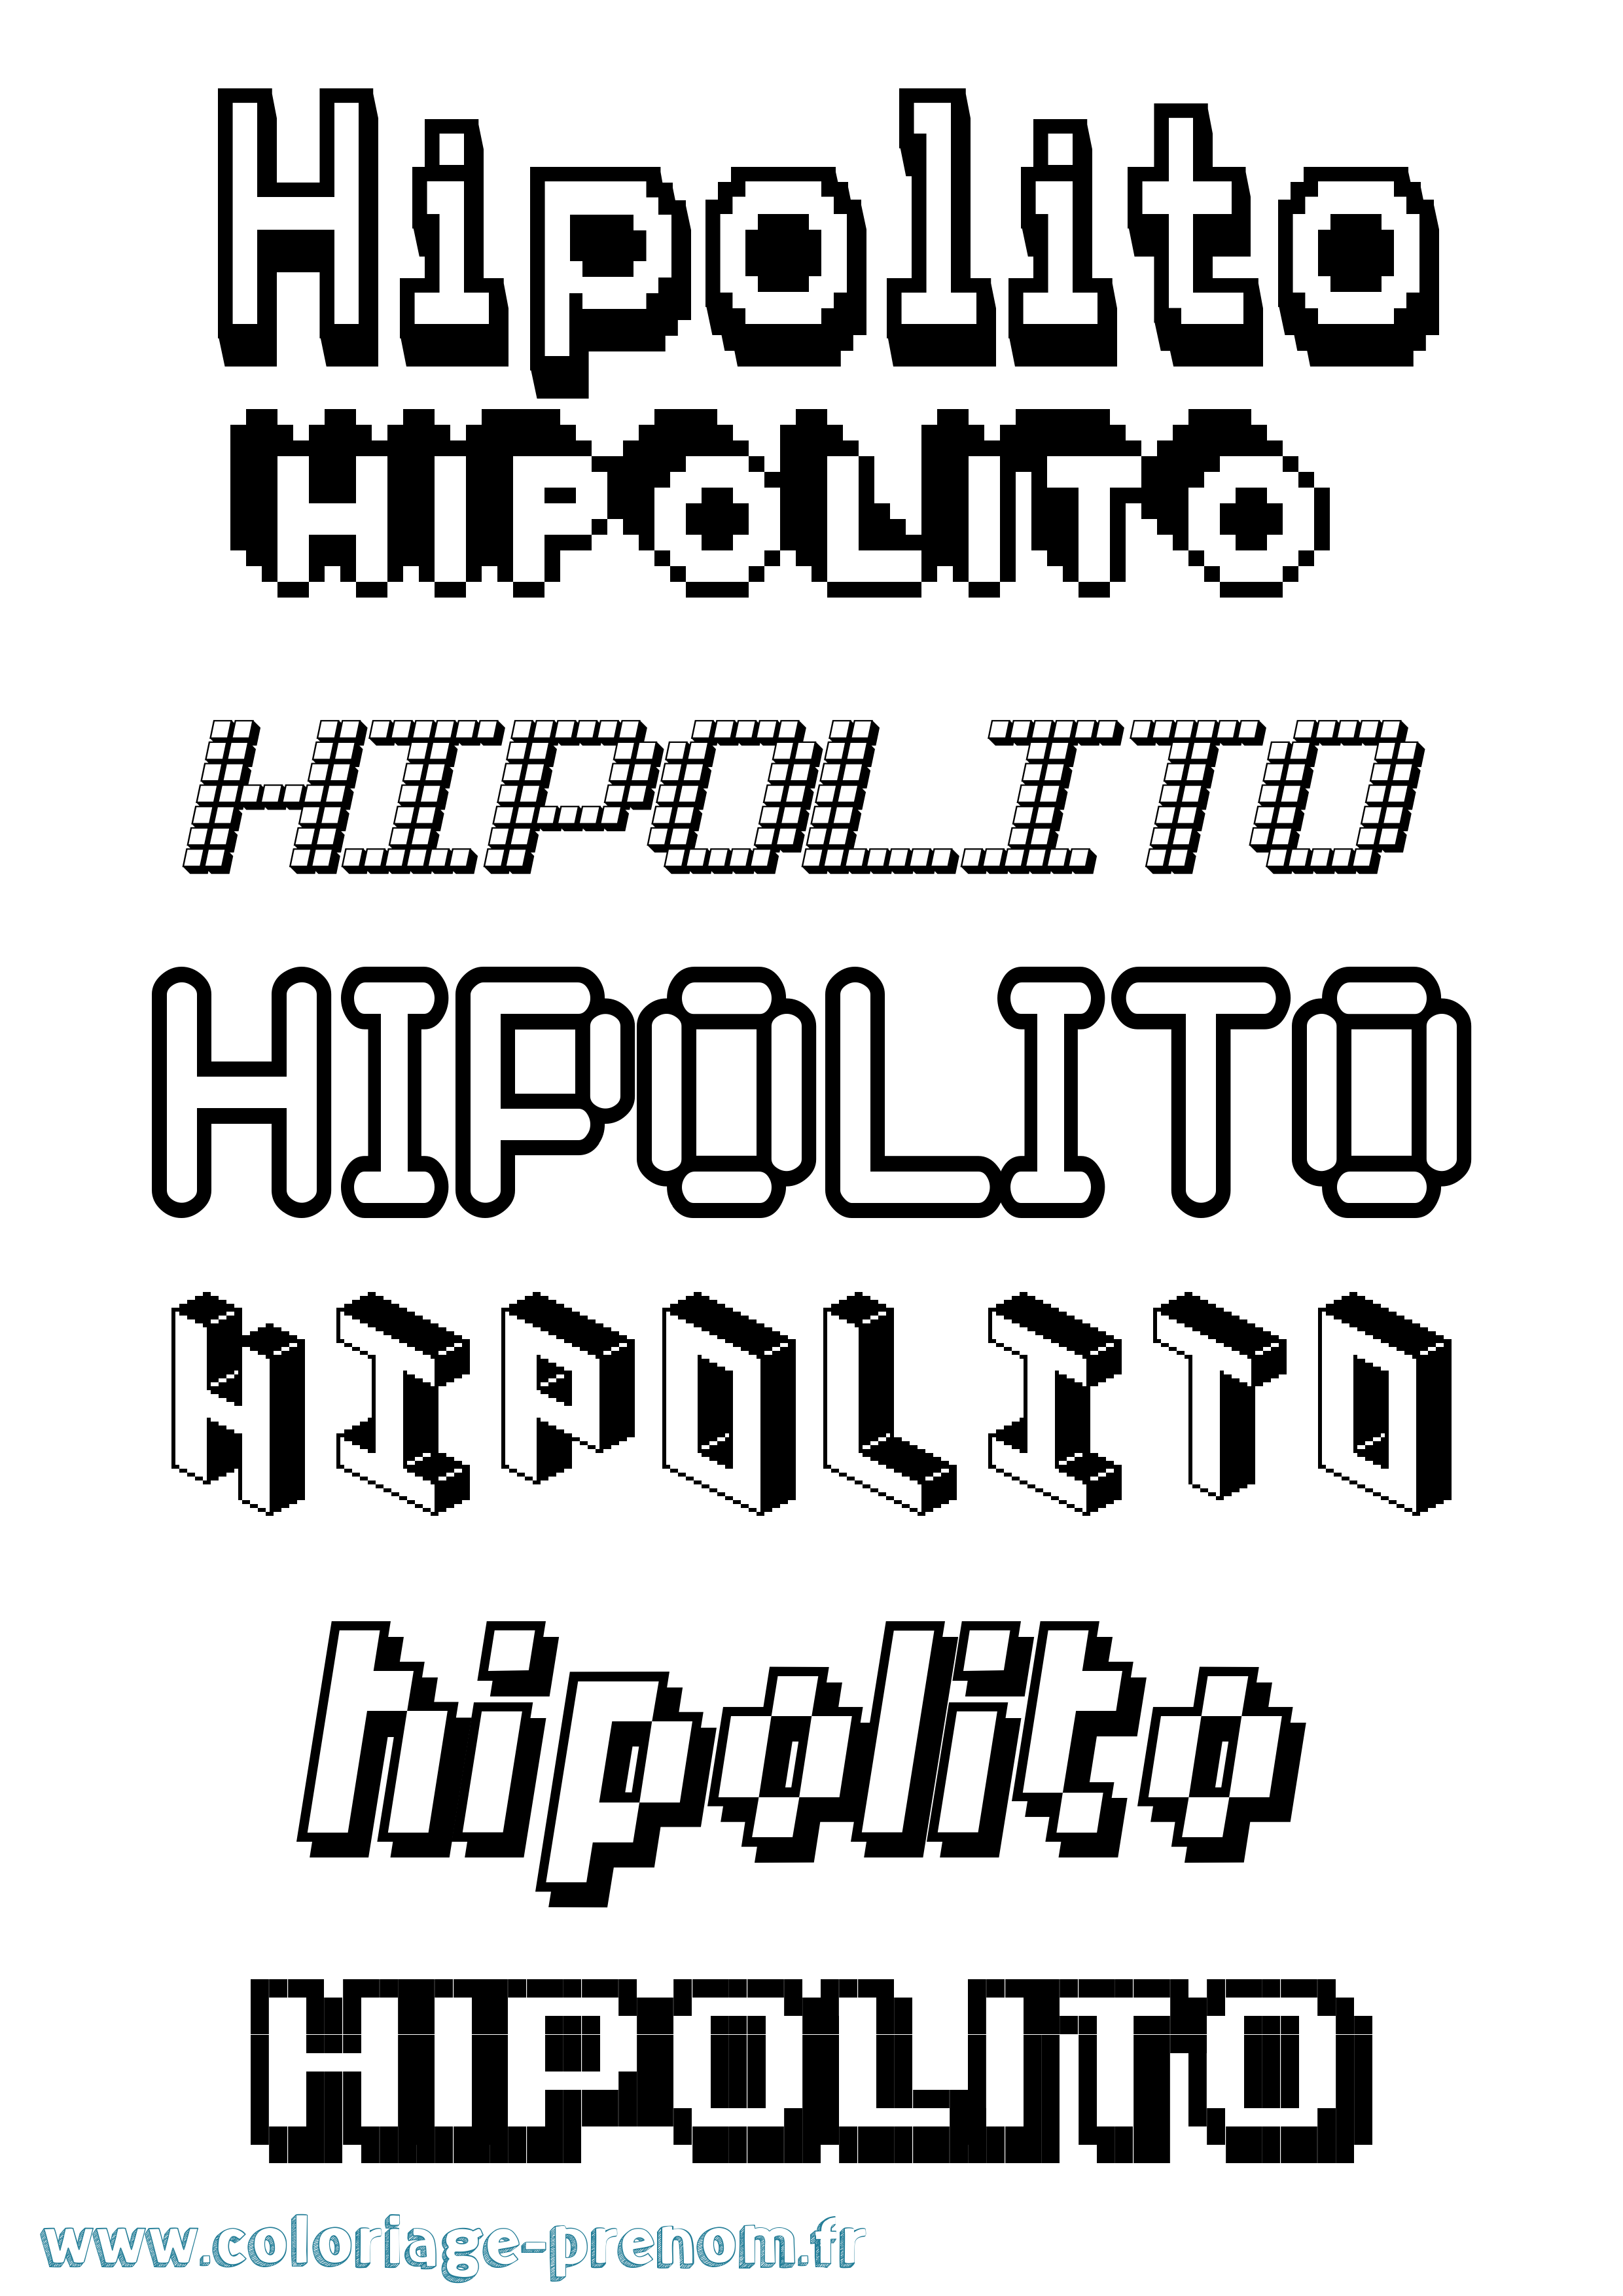 Coloriage prénom Hipolito Pixel